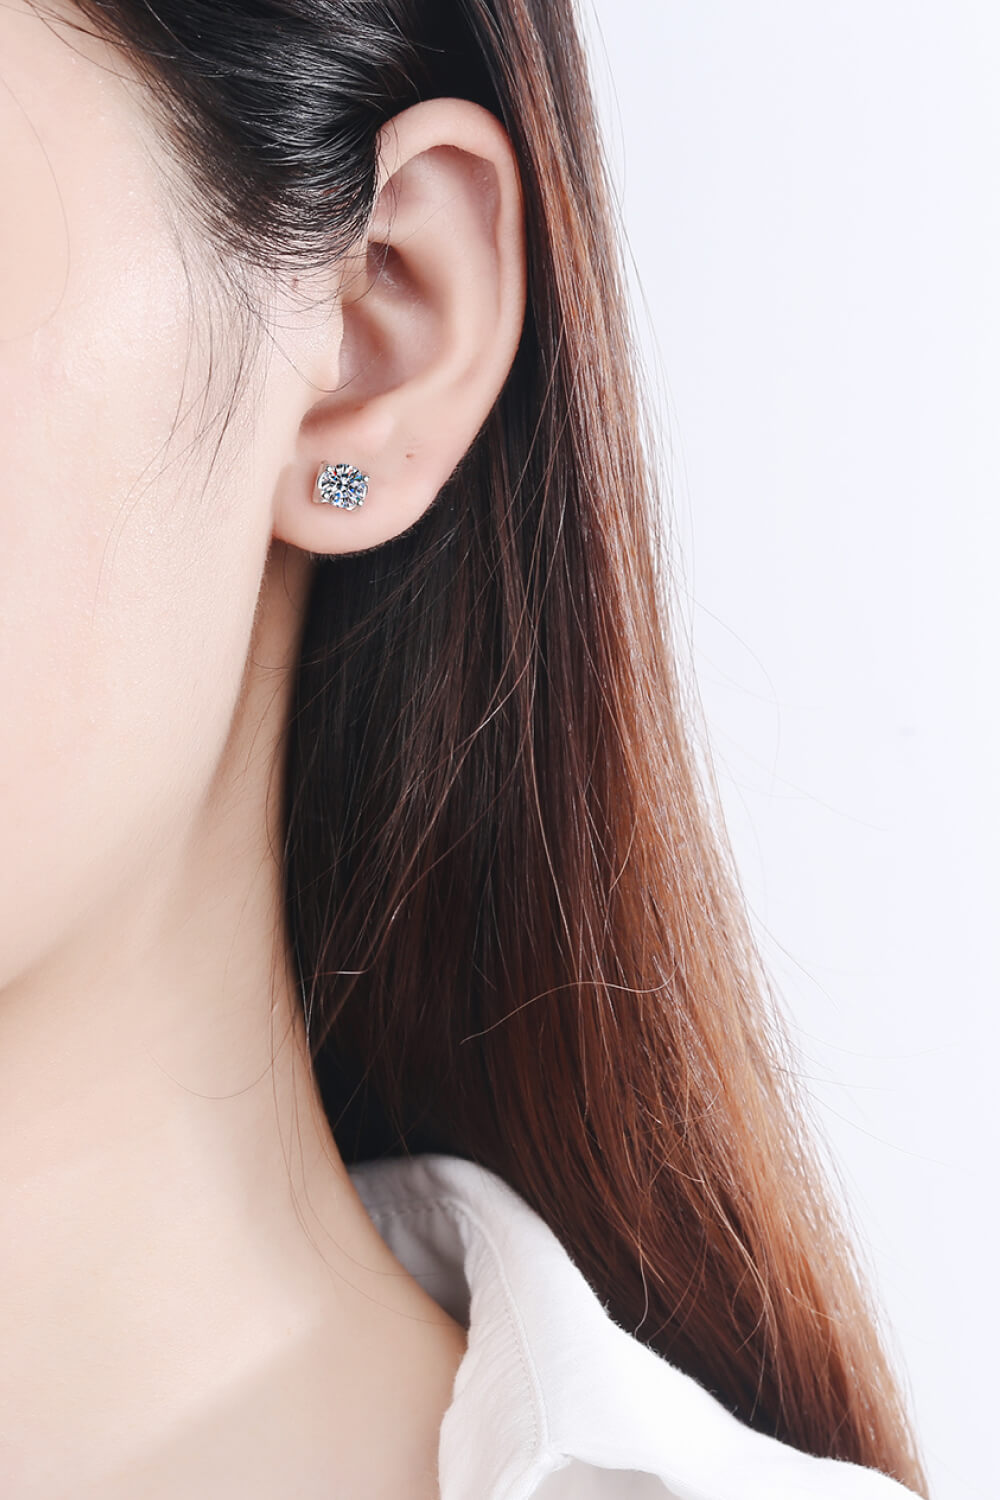 GRA Certified Beautiful Moissanite Stud Earrings